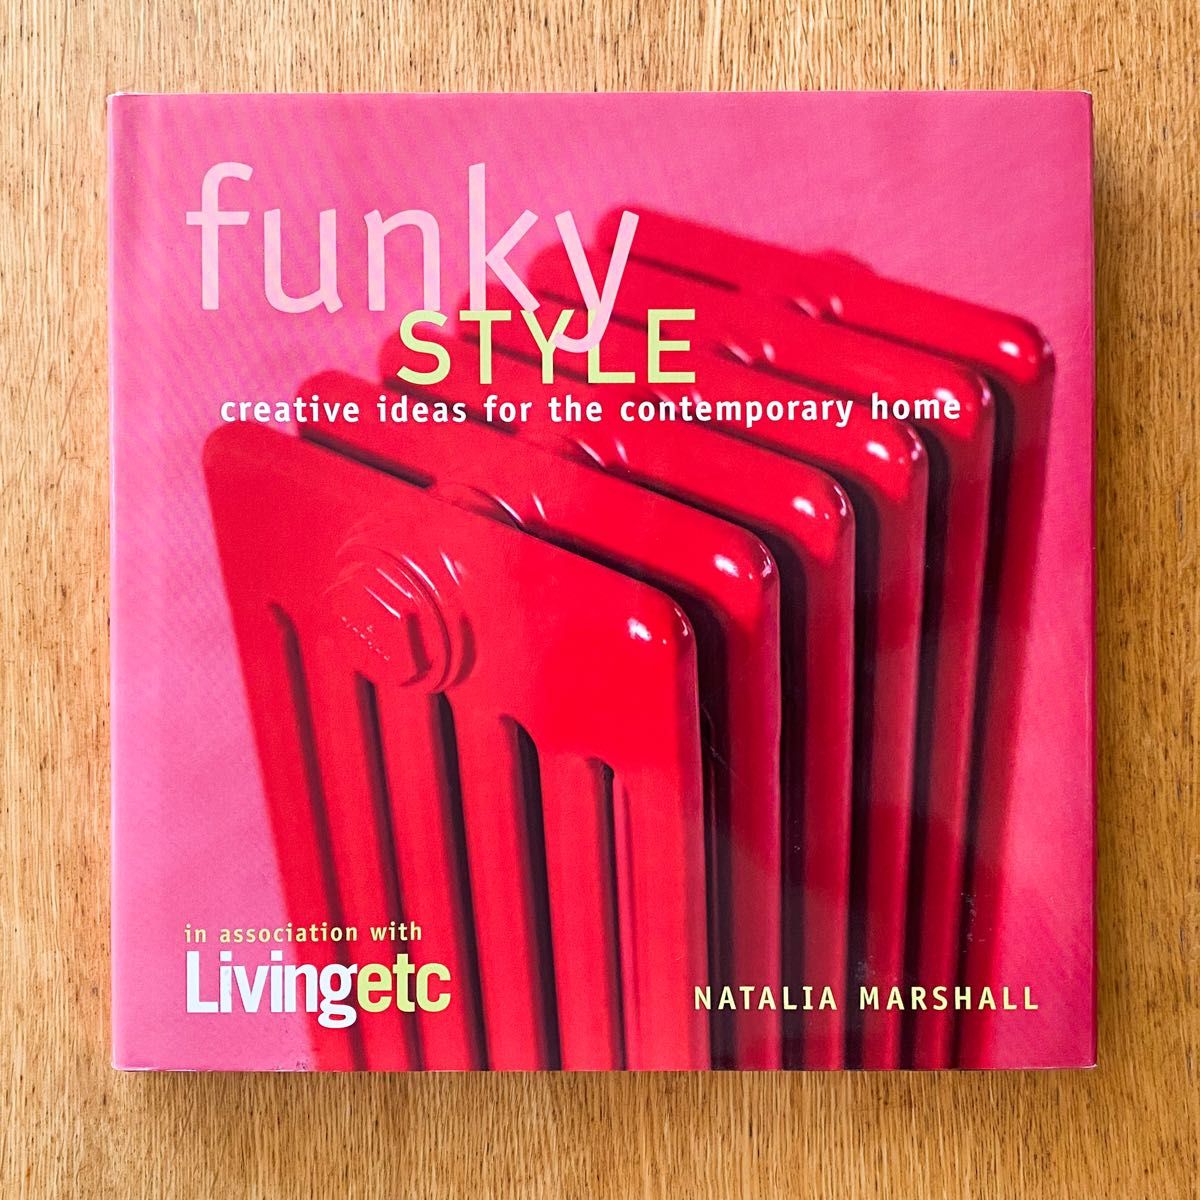 Funky Style: Creative Ideas/NATALIA MARSHALL ファンキースタイル/ナタリア・マーシャル